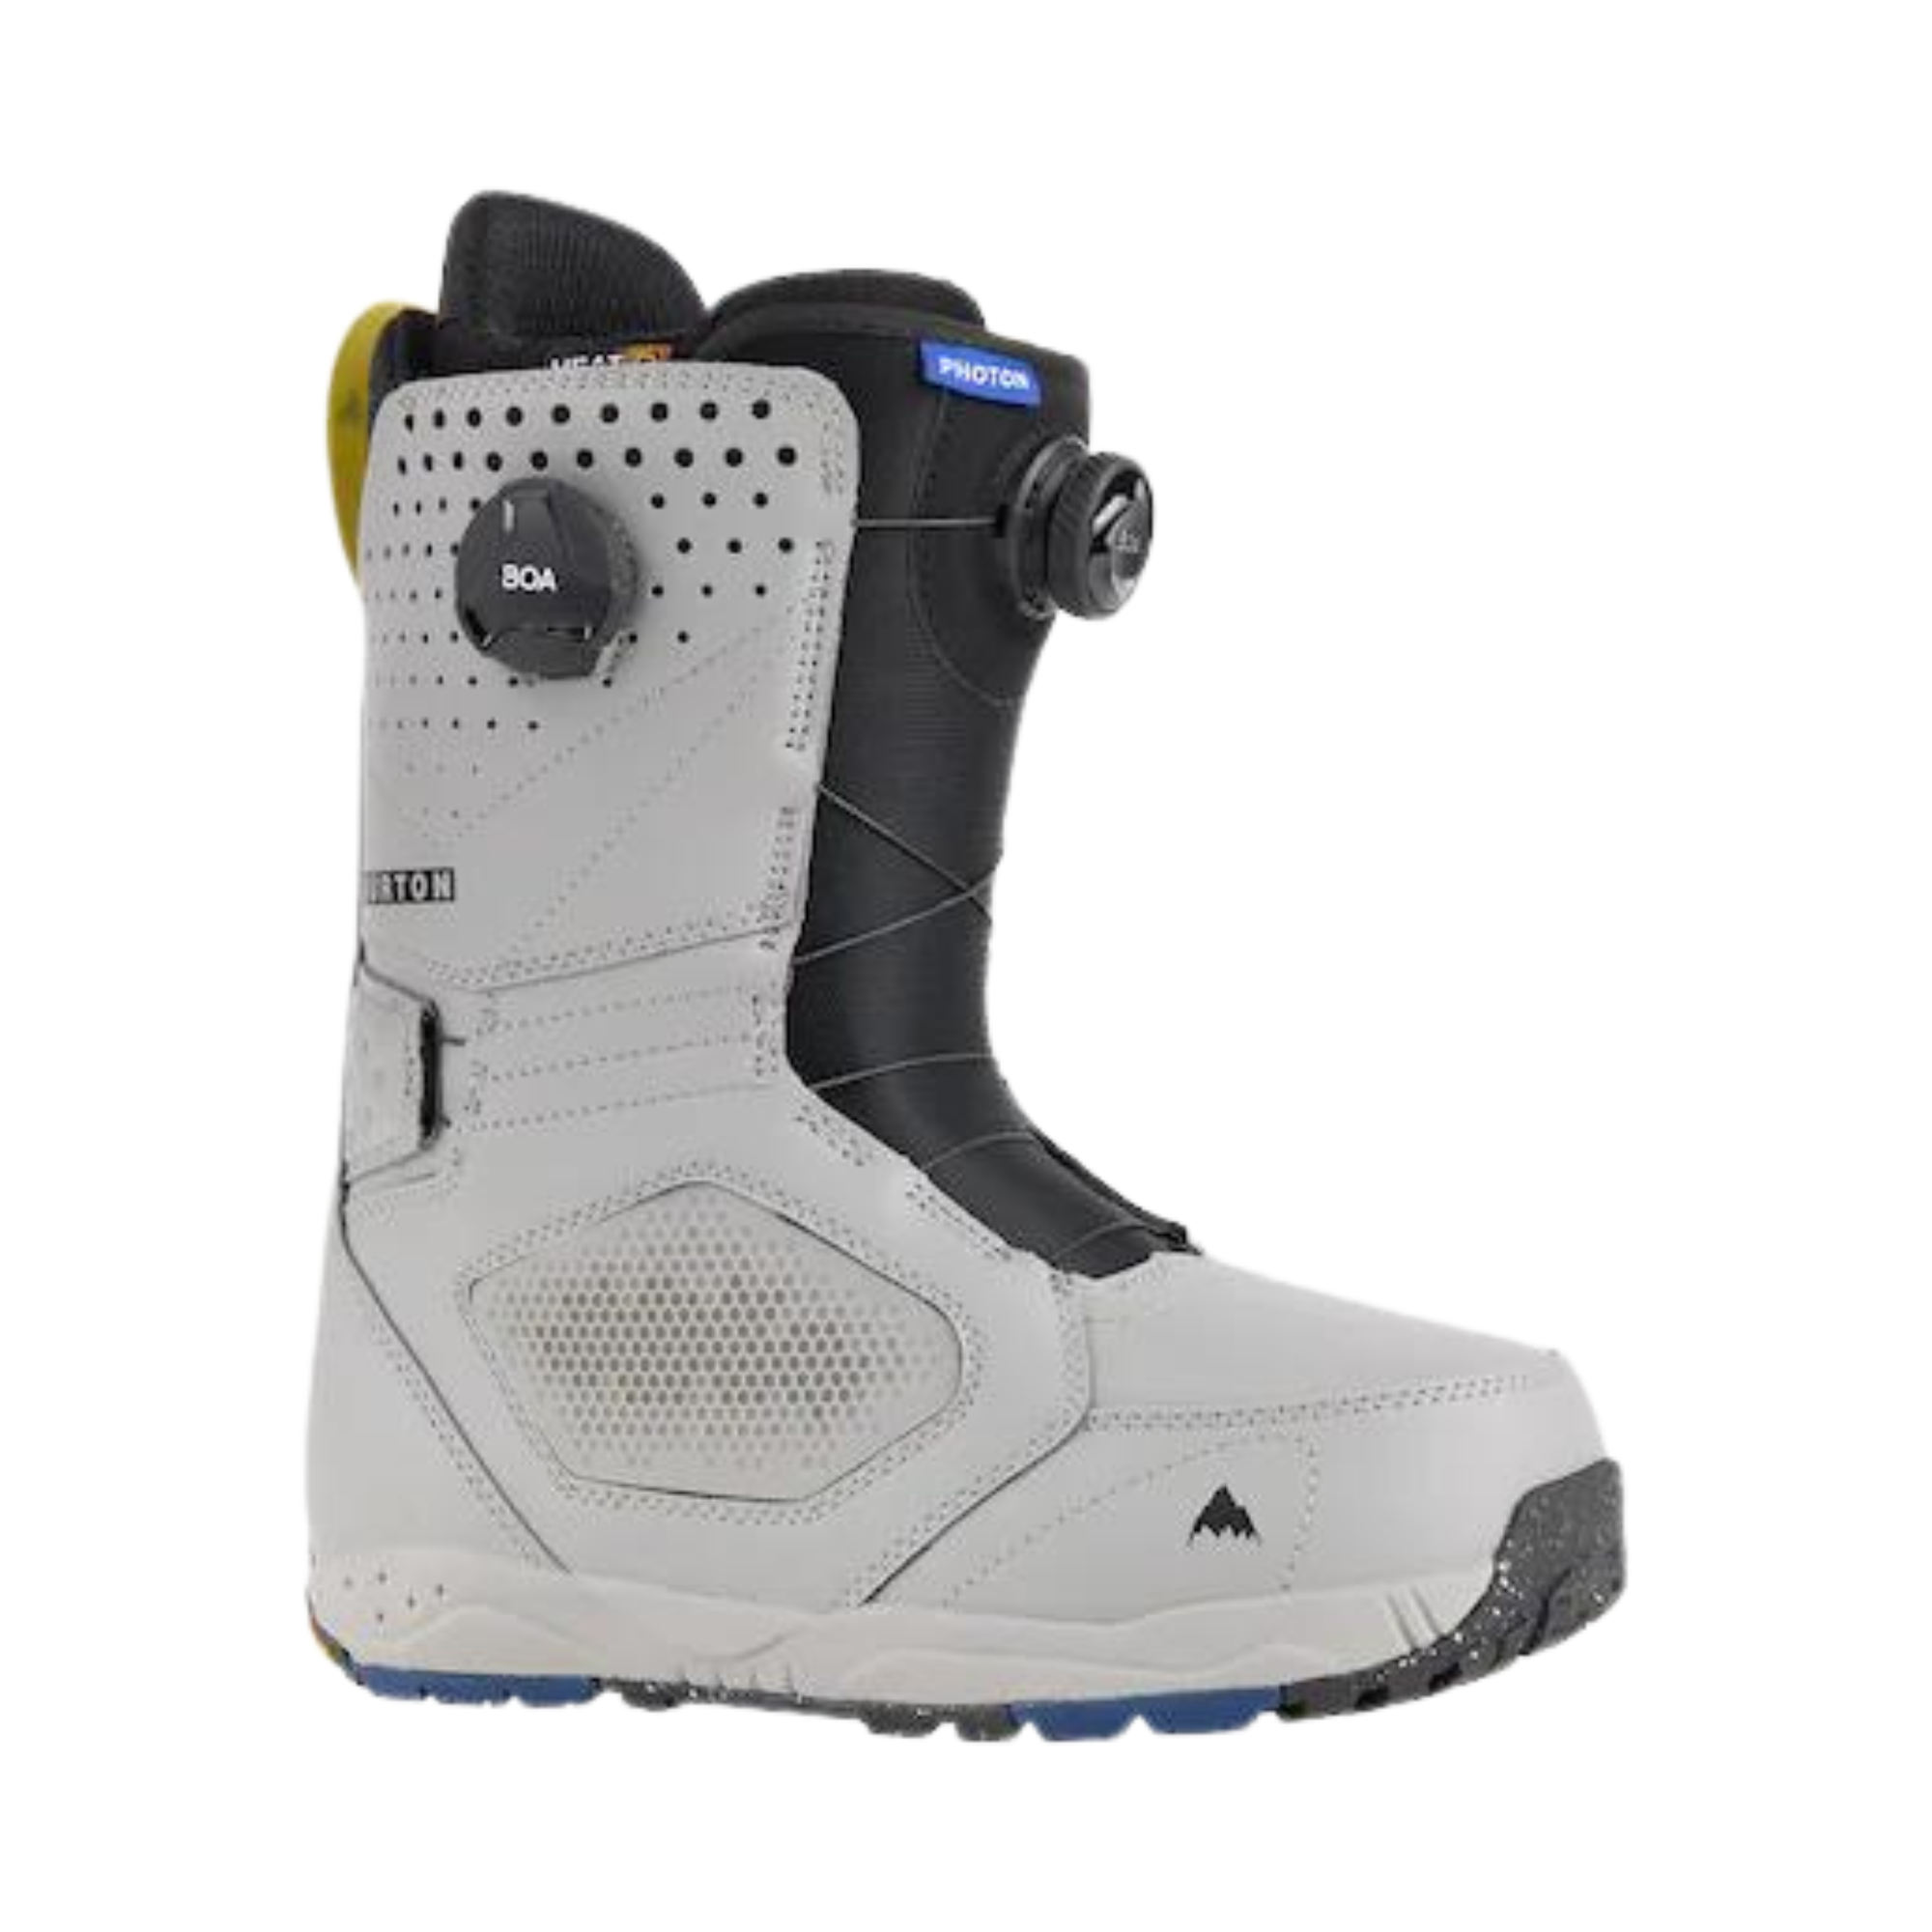 Burton Men's Photon BOA® Snowboard Boots - Wide - Gray